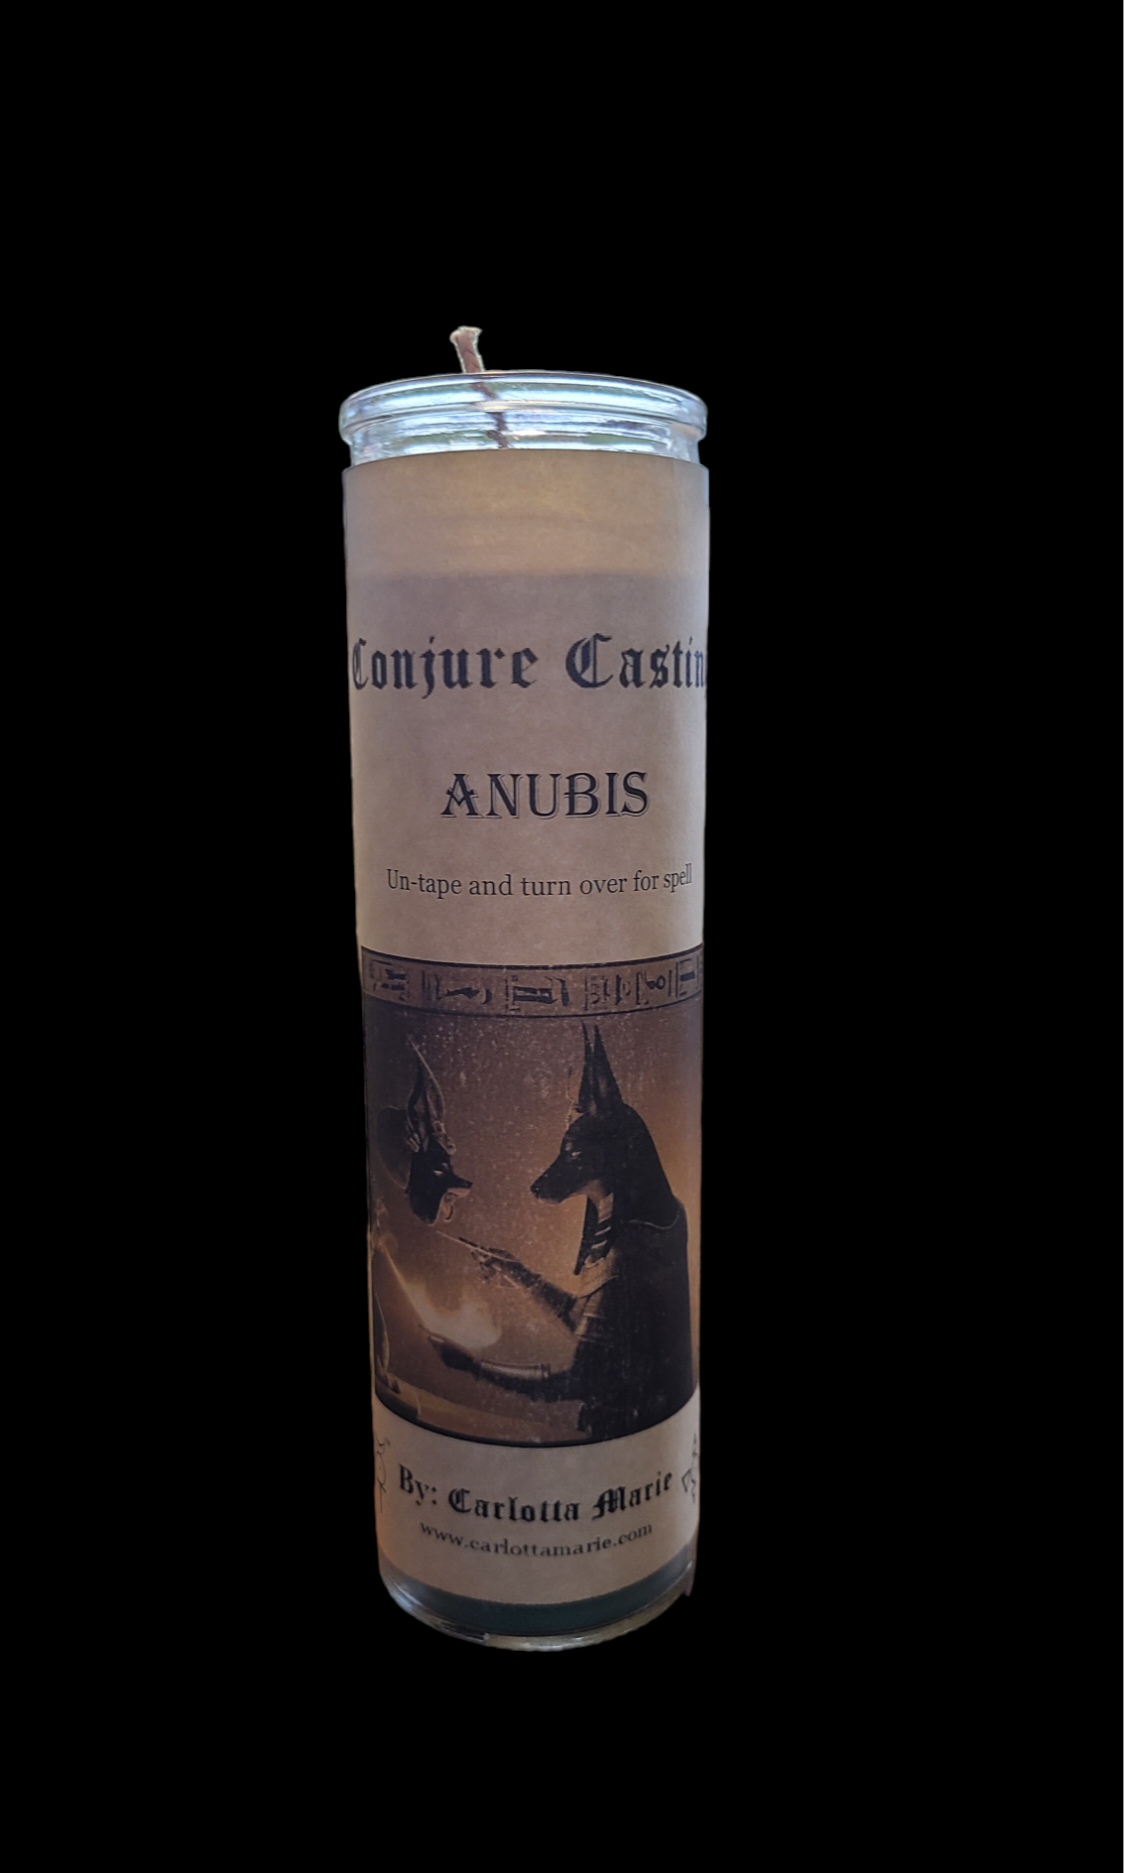 Anubis ritual candle